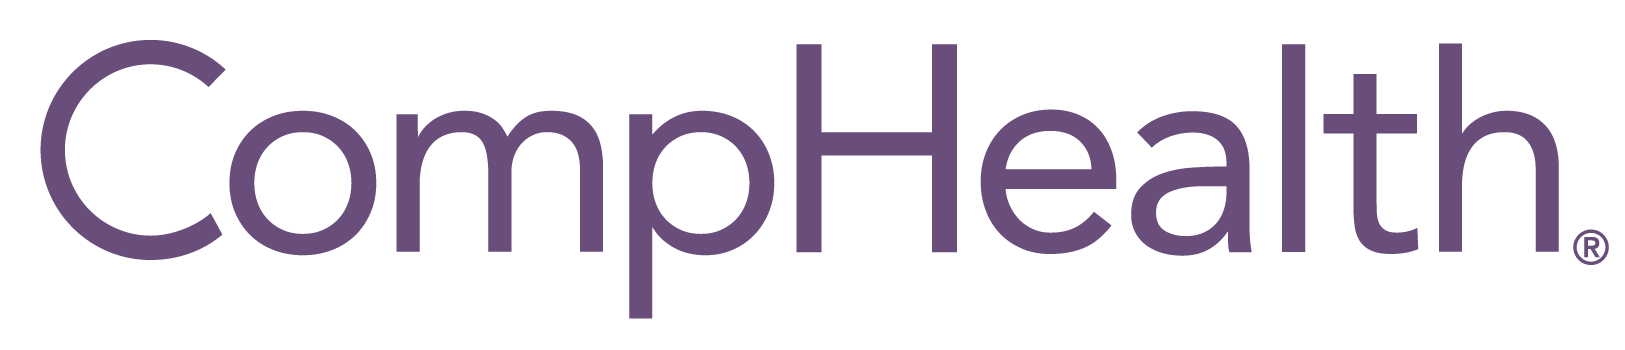 CompHealth logo